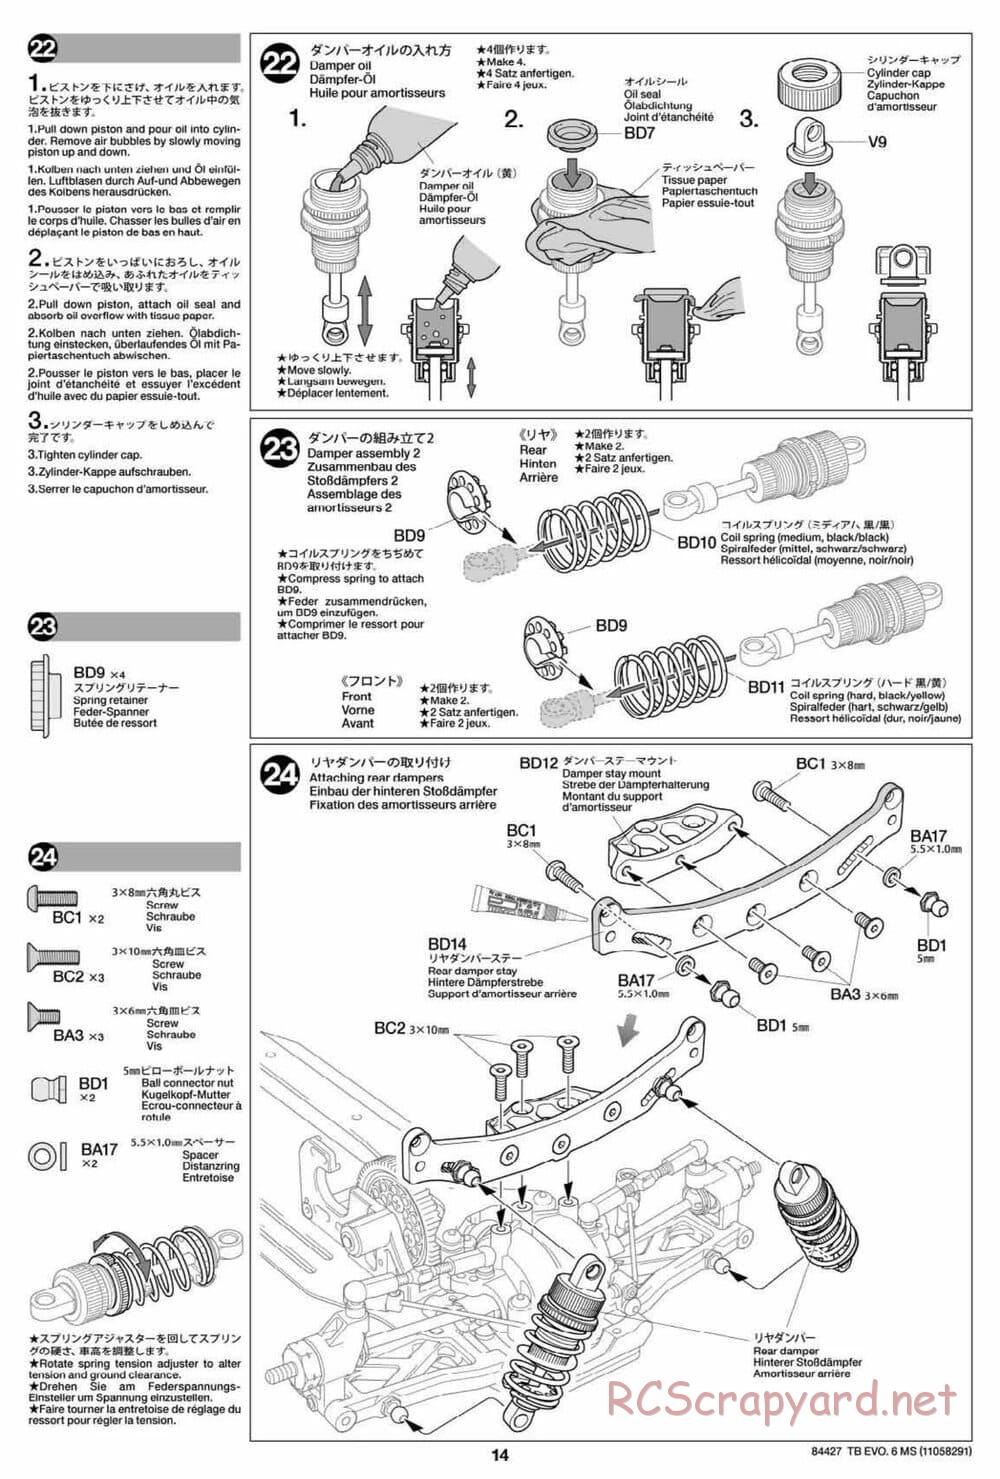 Tamiya - TB Evo.6 MS Chassis - Manual - Page 14